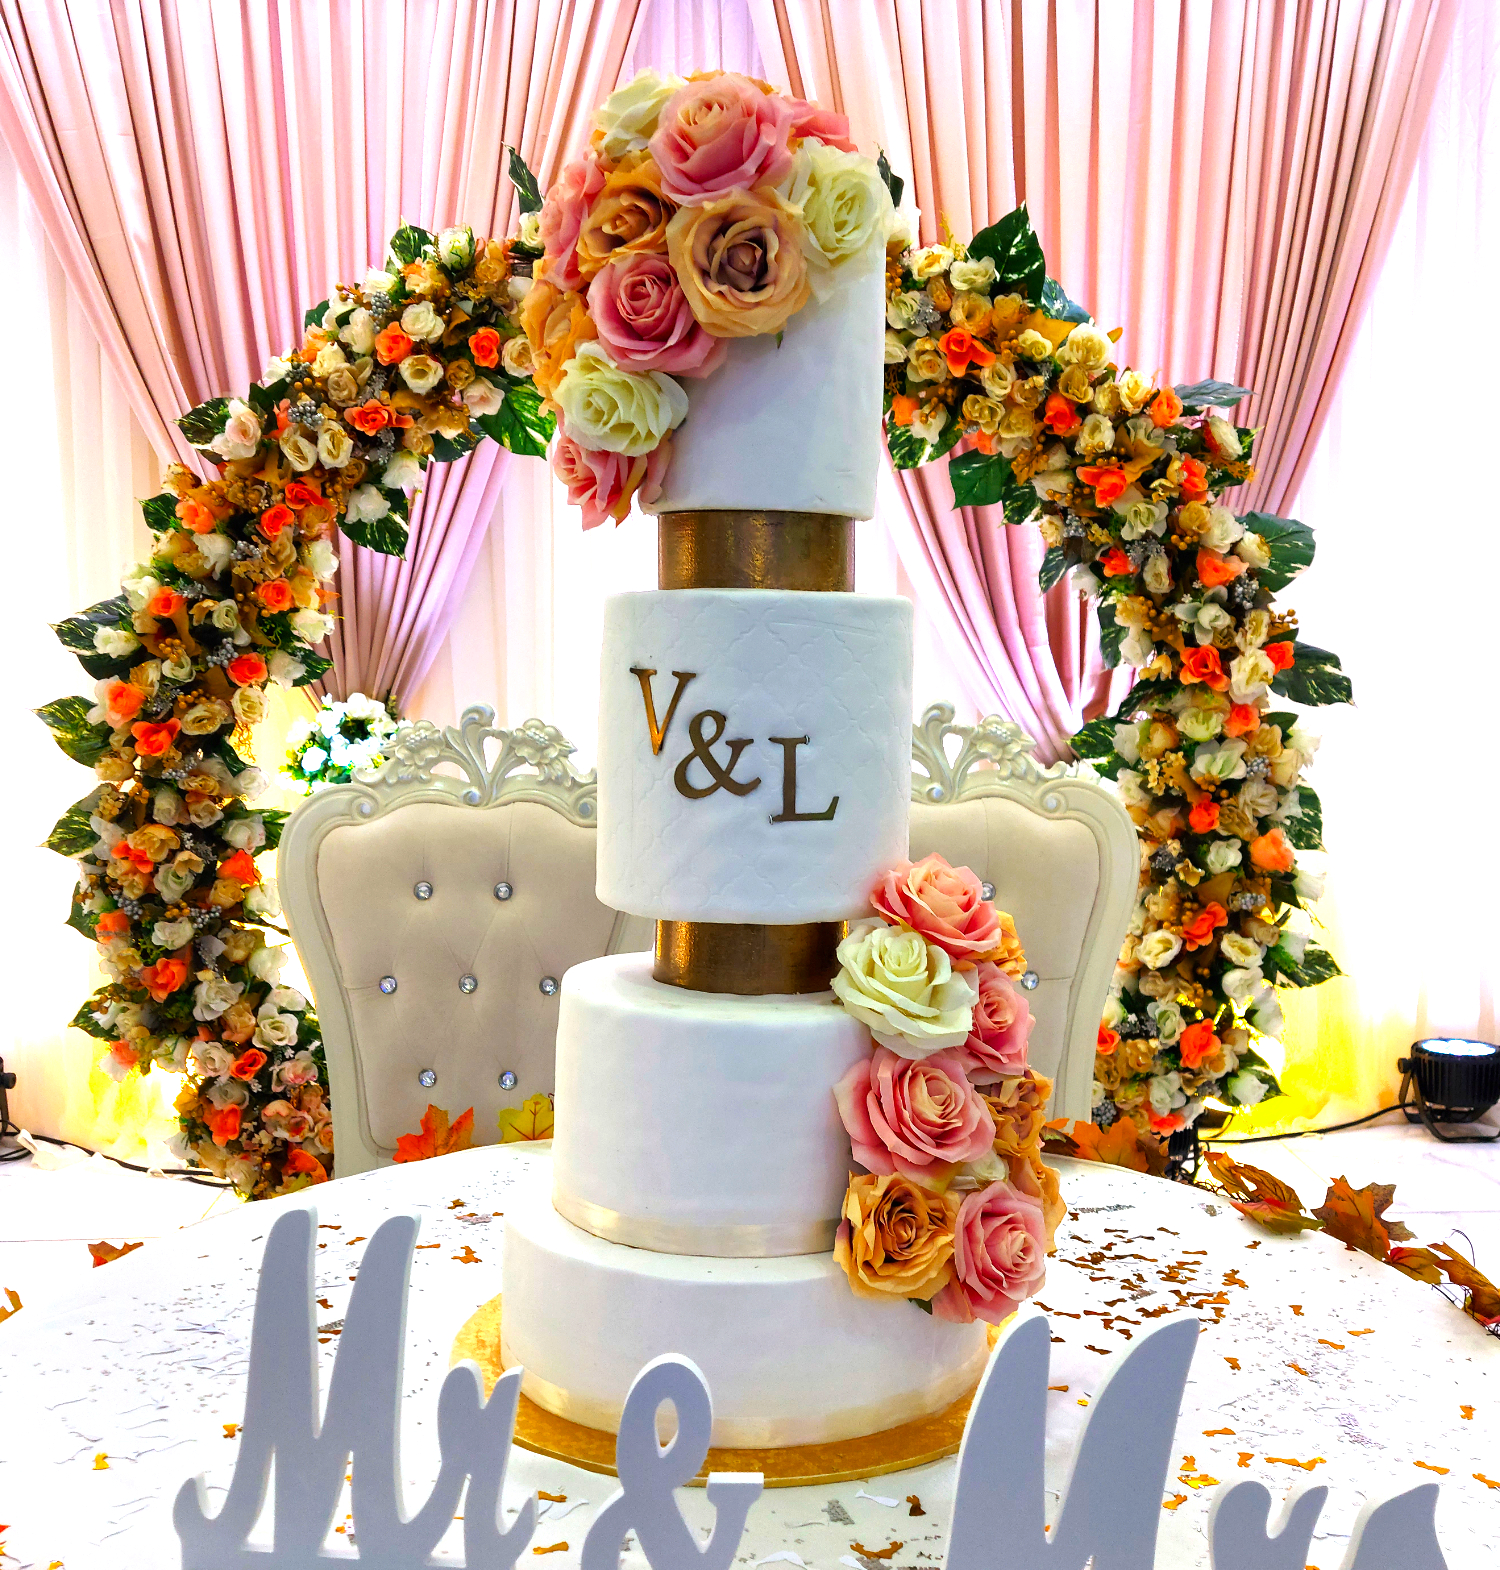 Wedding cake Mauritius - Cerise Doree Pastry